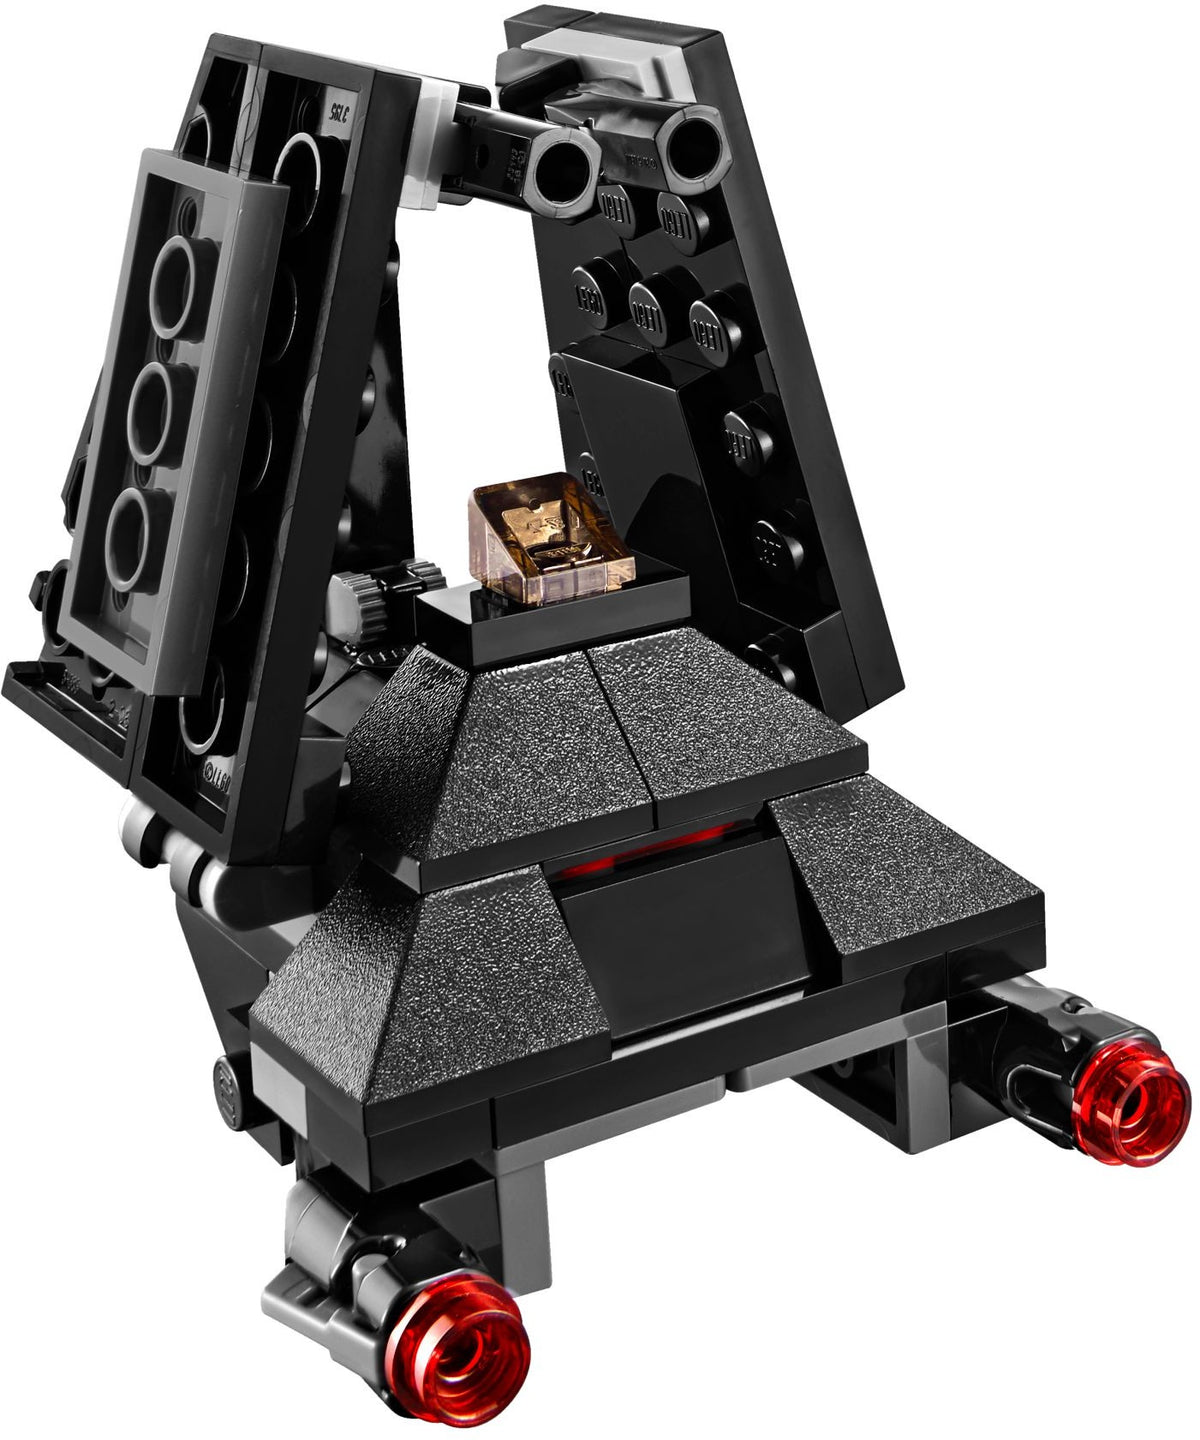 LEGO Star Wars 75163 Krennic&#39;s Imperial Shuttle Microfighter